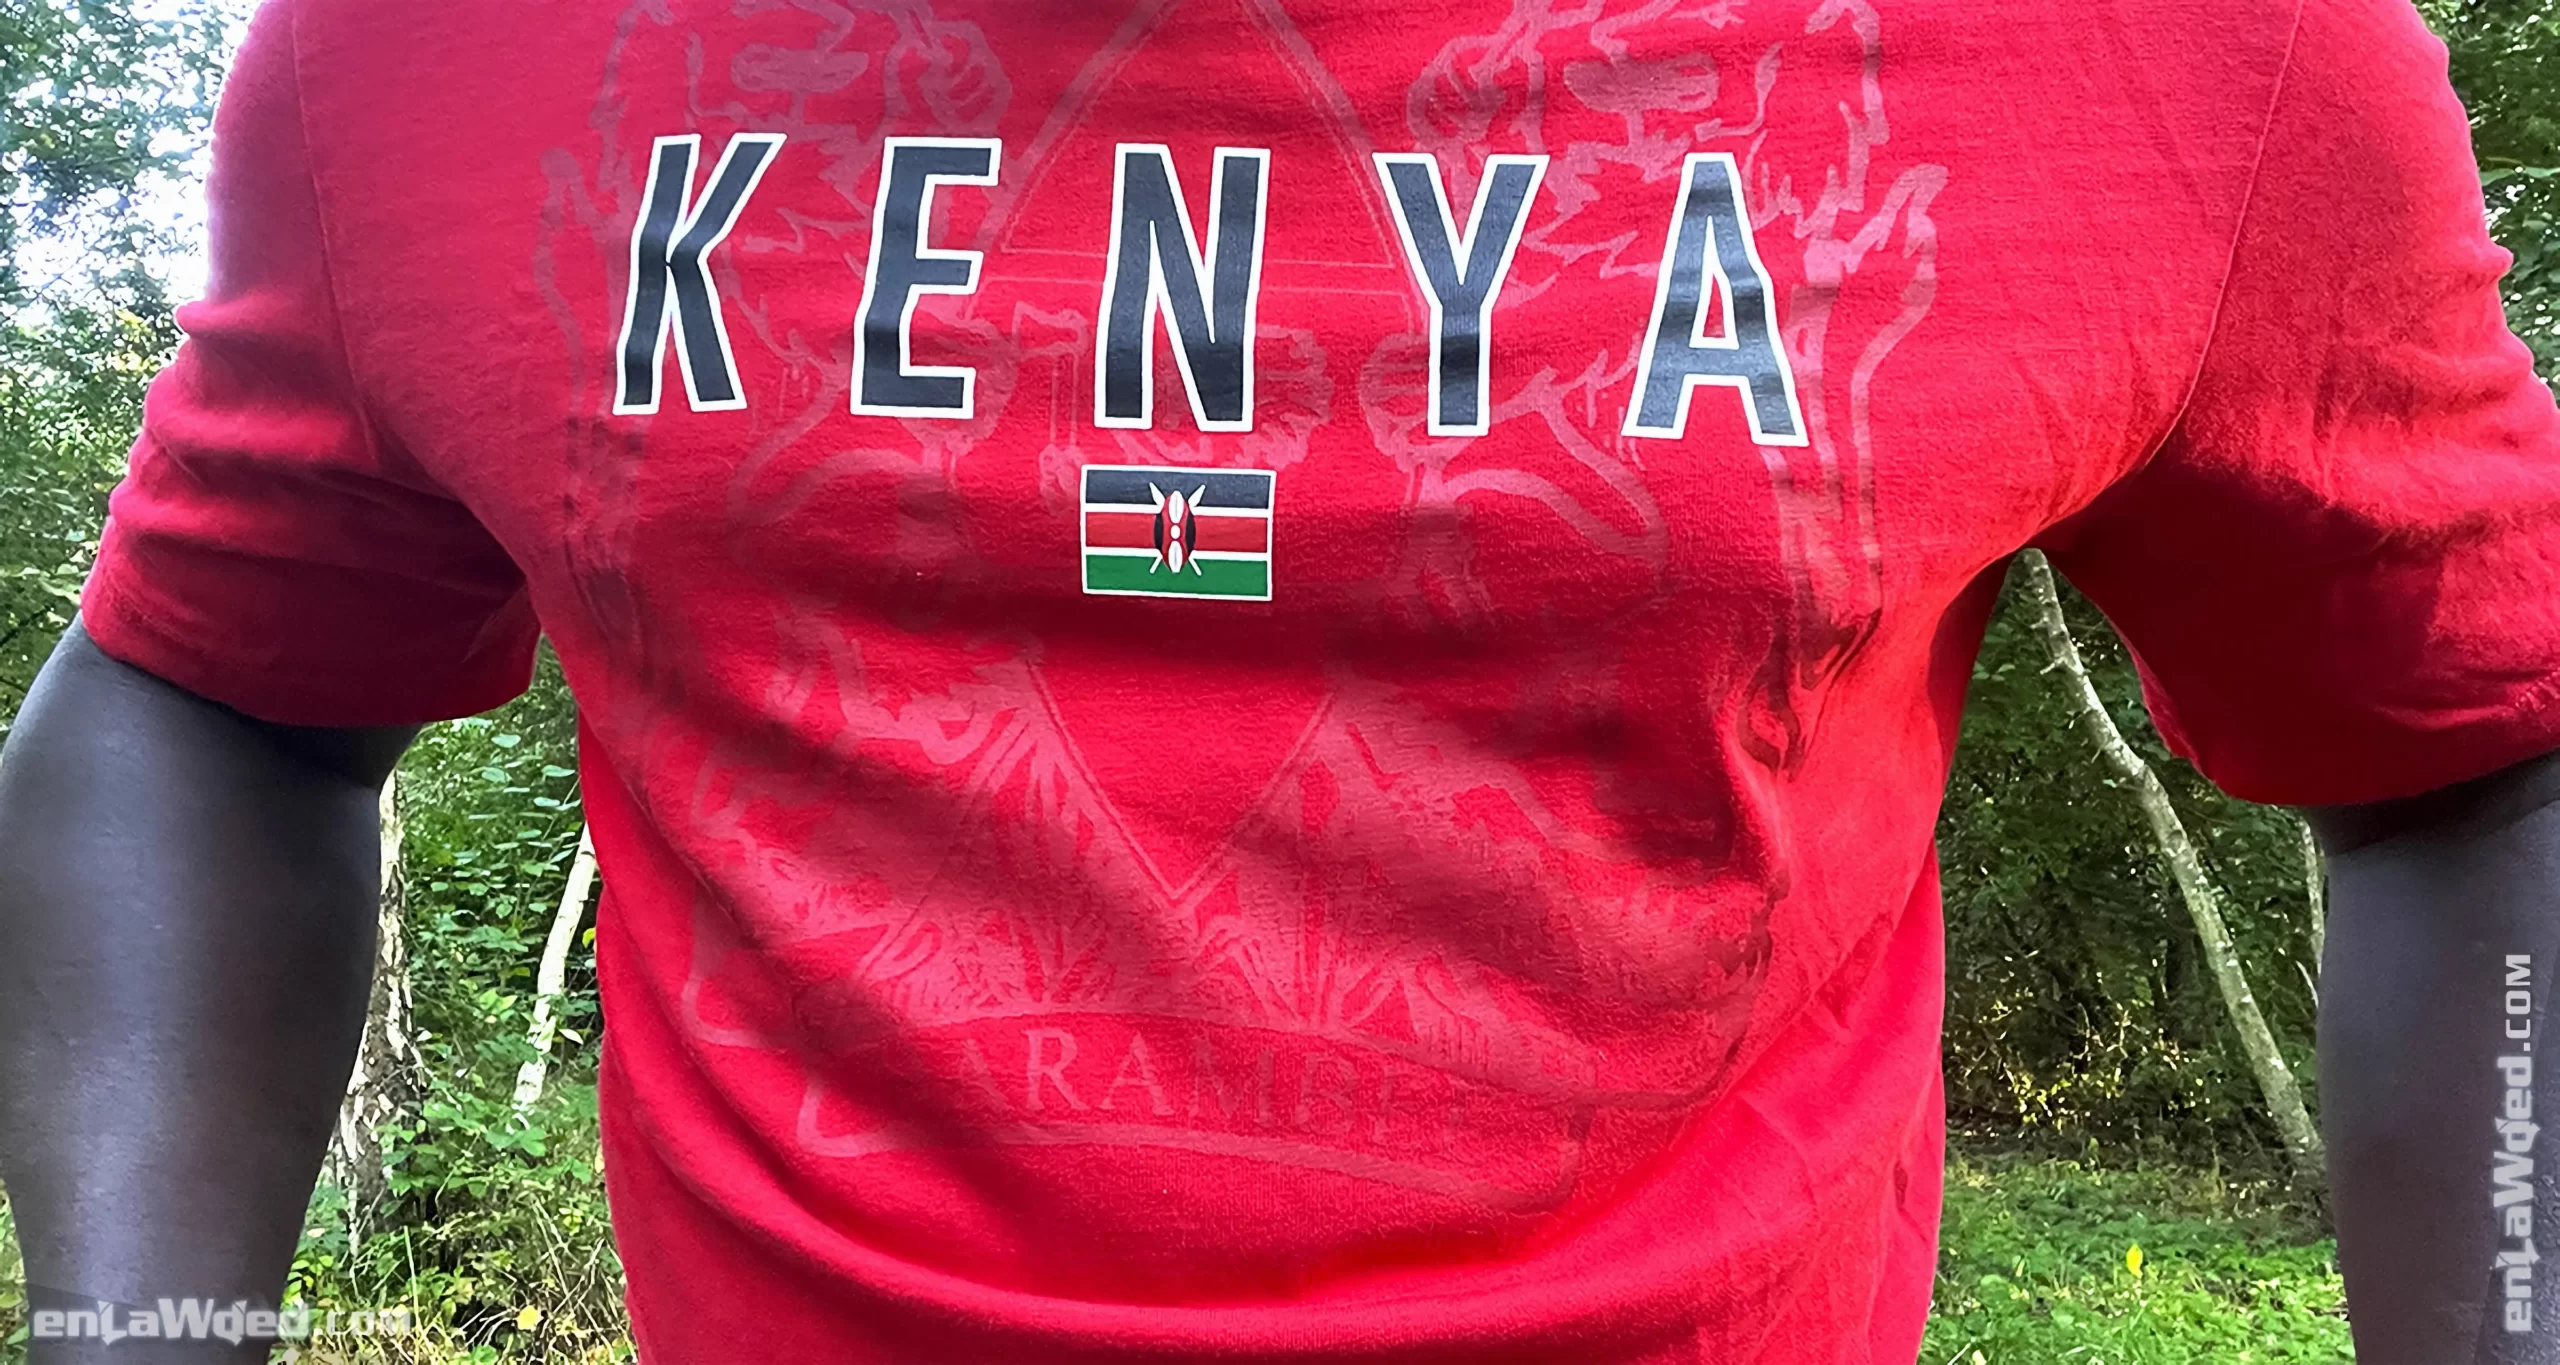 Men’s 2007 Kenya Harambee T-Shirt by Adidas Originals: Overnight (EnLawded.com file #lp1nbelb126187pqhzomxt1k)